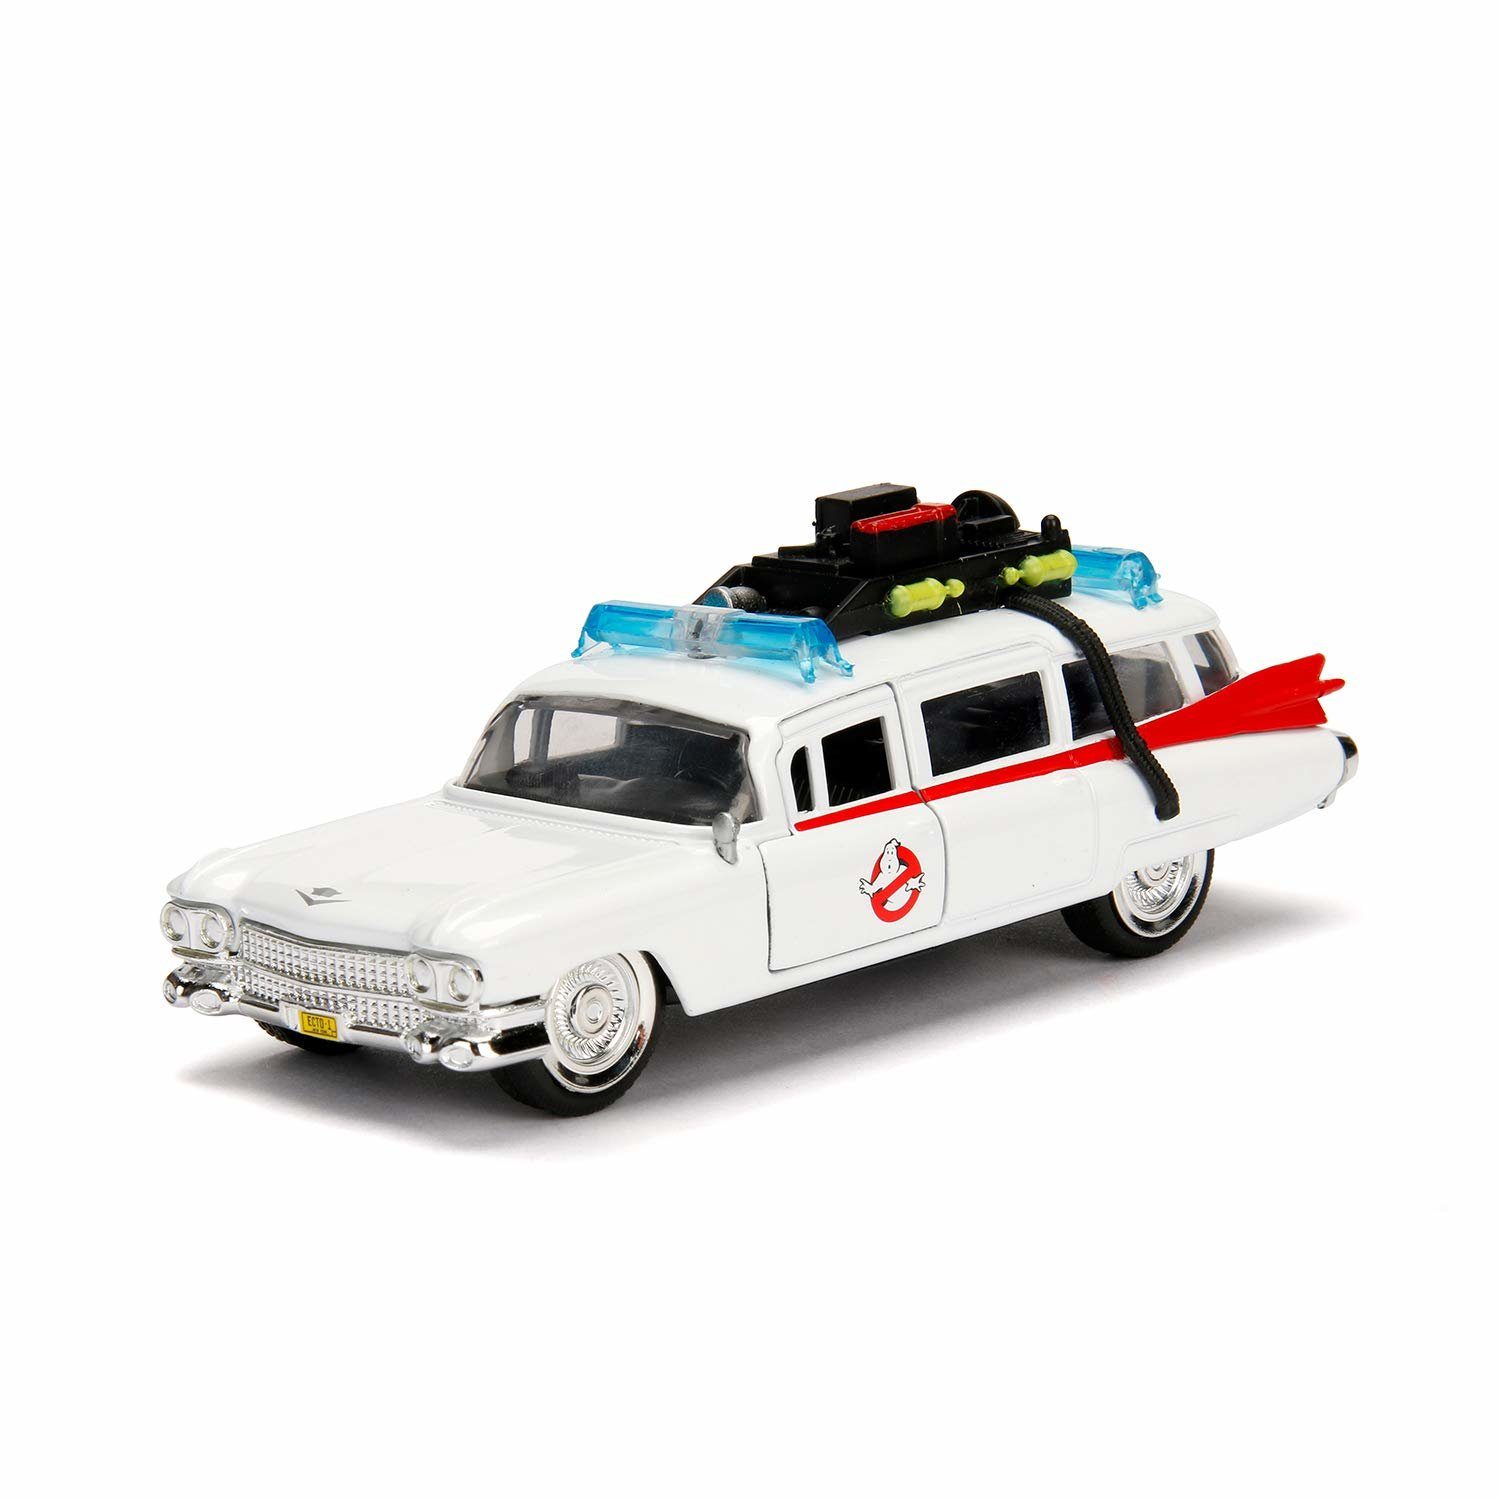 JADA Spielzeug-Auto Ghostbusters - ECTO-1 - Geisterjäger Einsatzfahrzeug